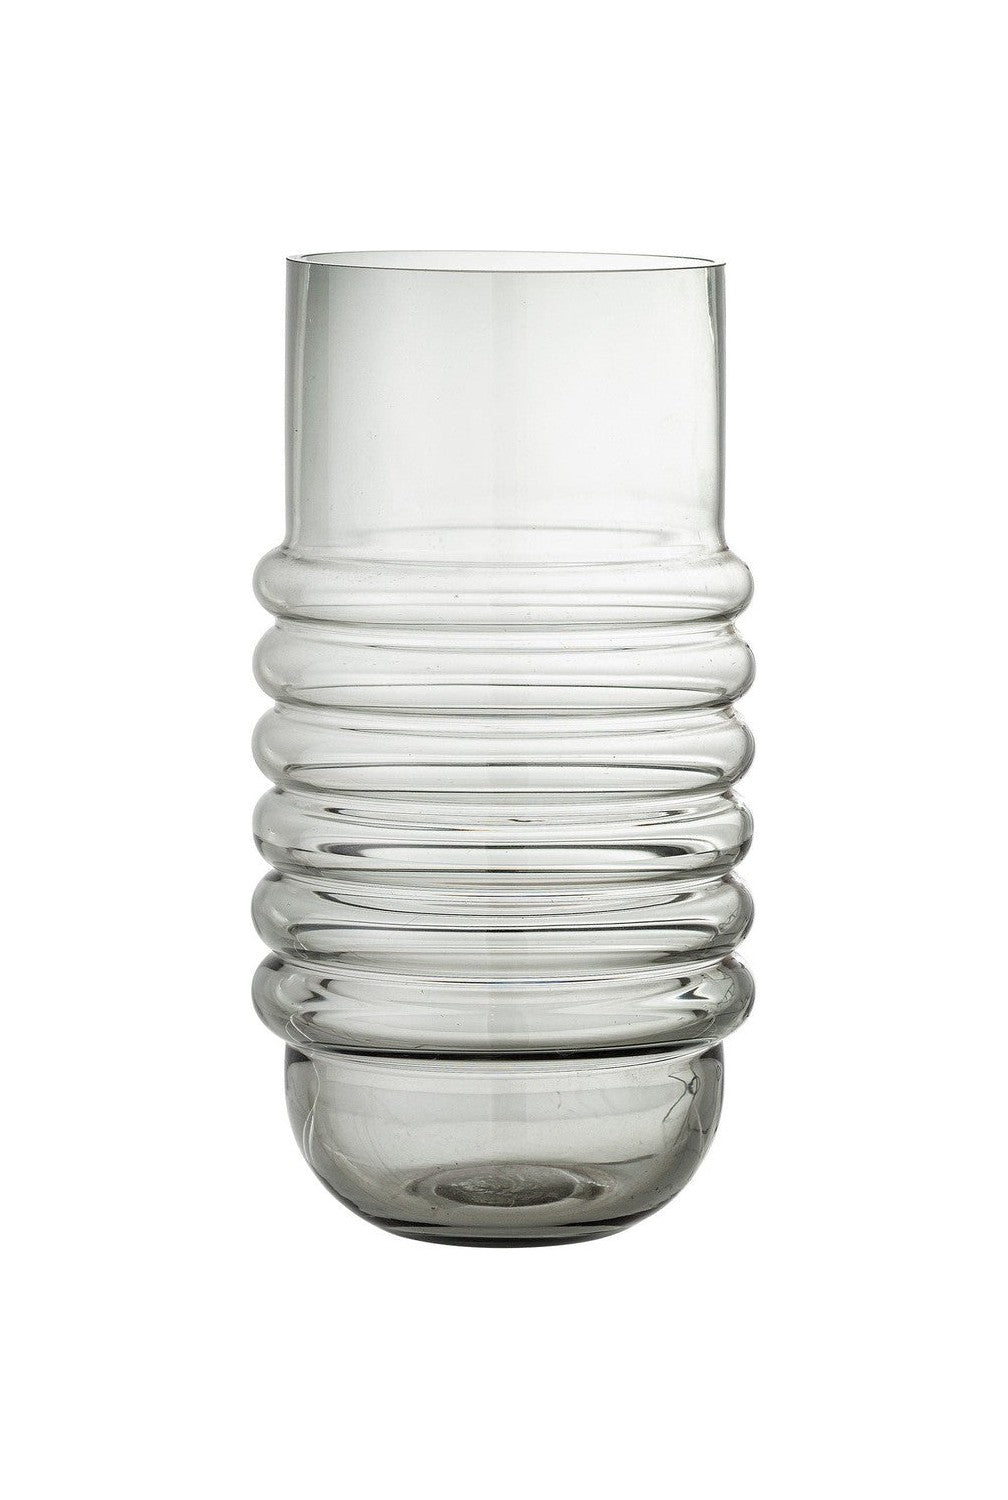 Bloomingville Belma Vase, Grey, Glass